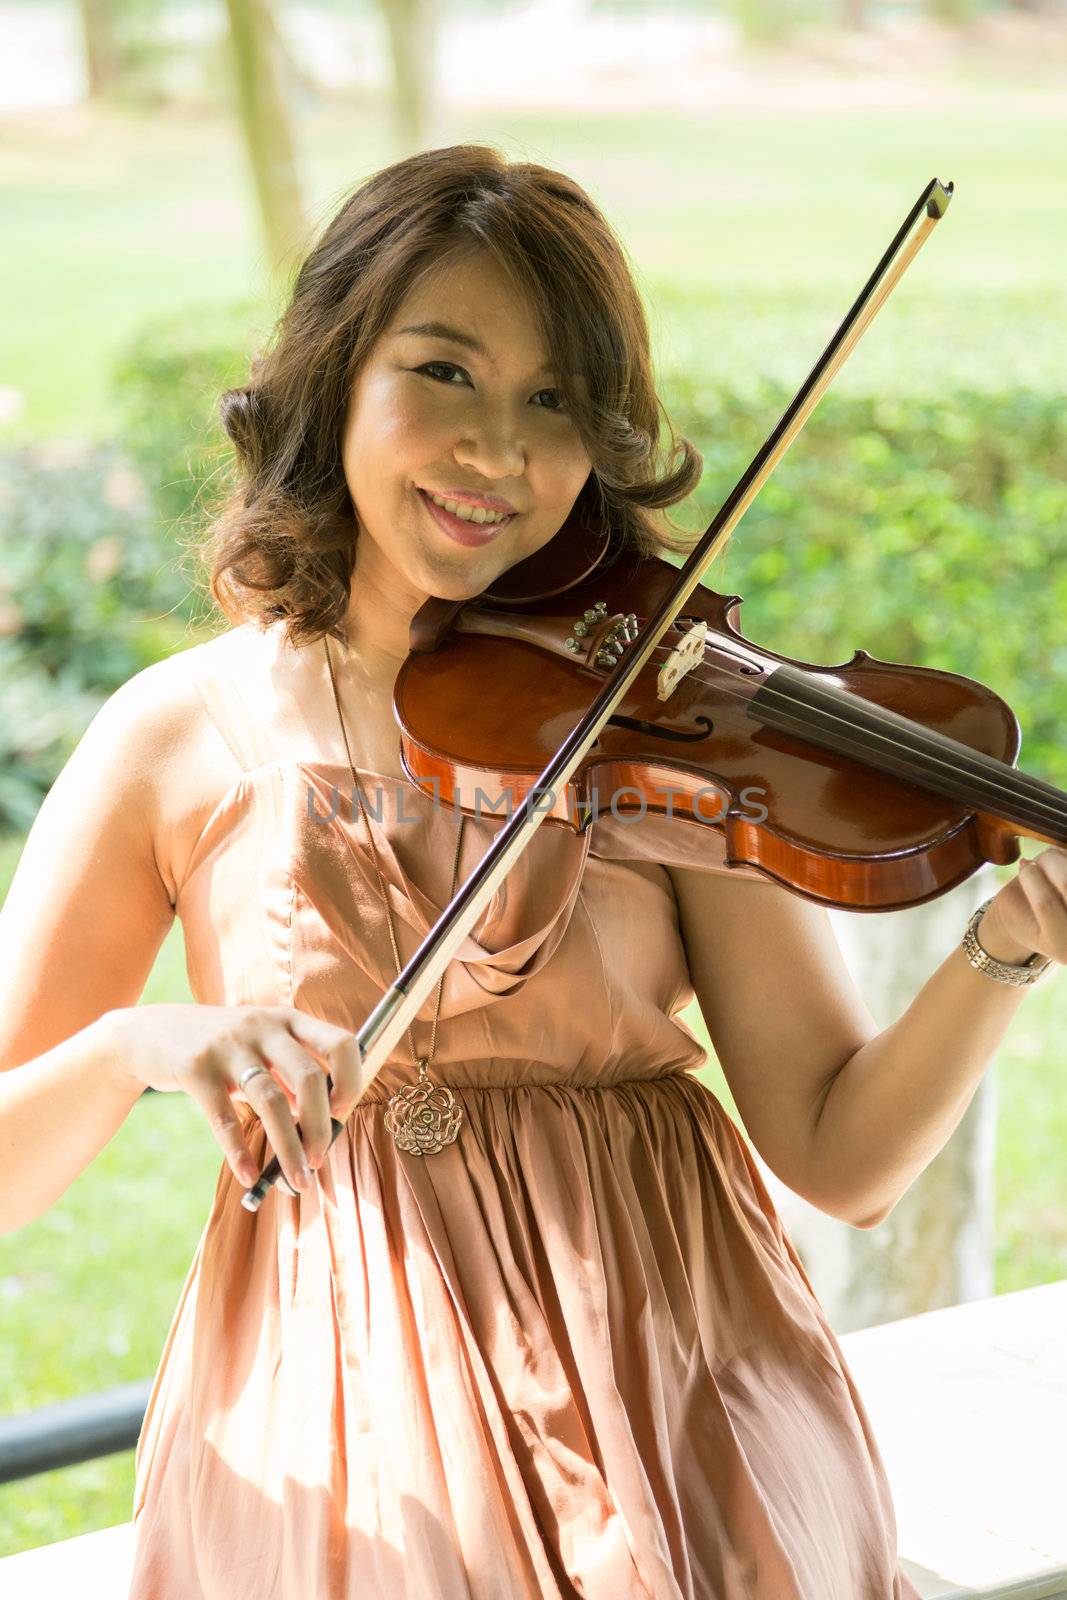 violinist lady by vichie81